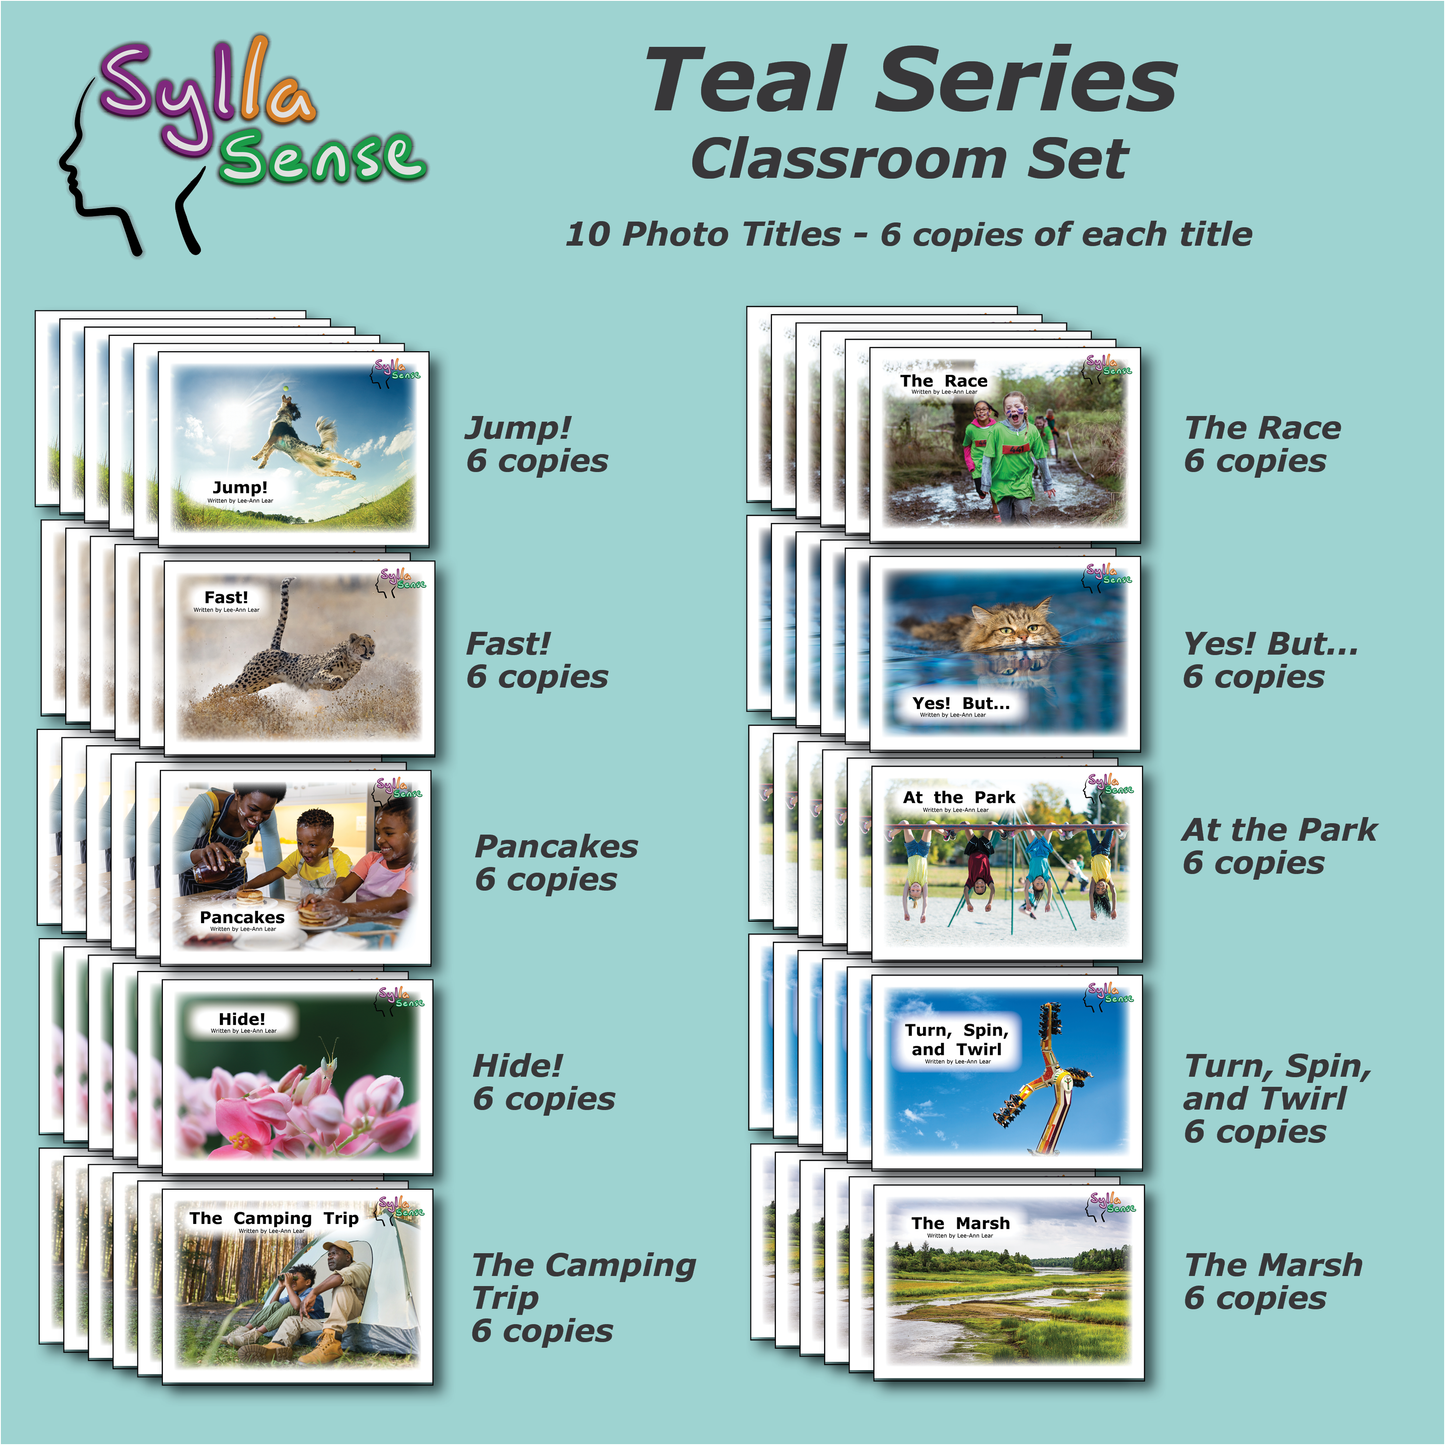 Teal Series - Classroom Set